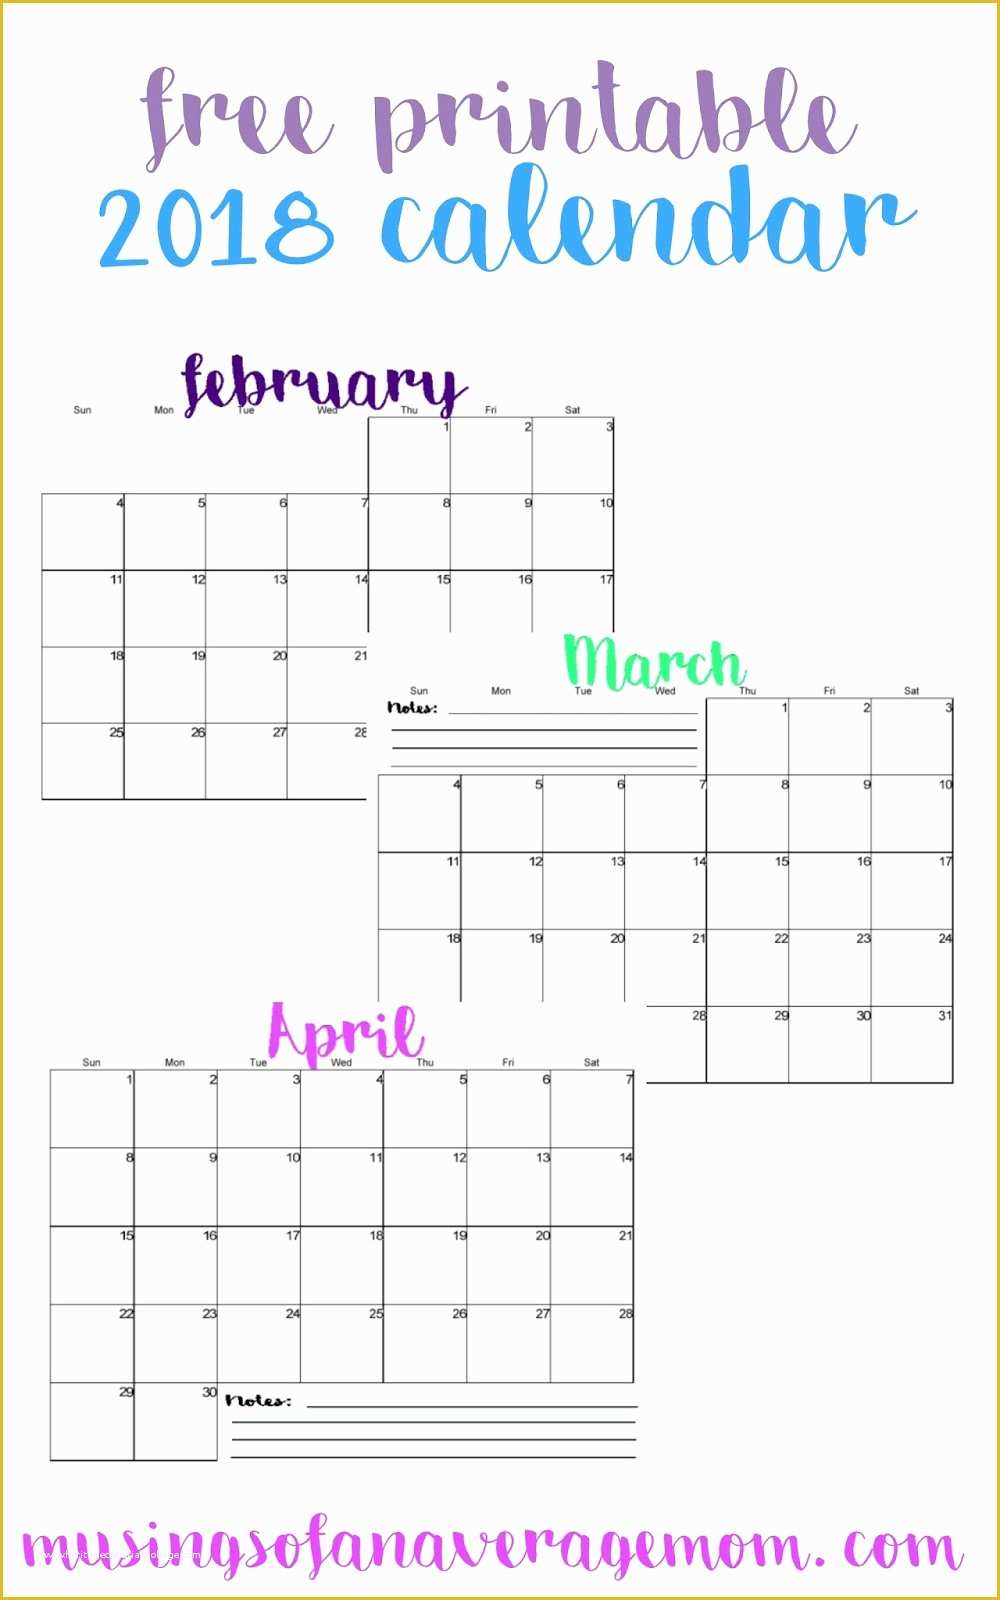 Free Downloadable Calendar Template Of Musings Of An Average Mom 2018 Horizontal Calendars